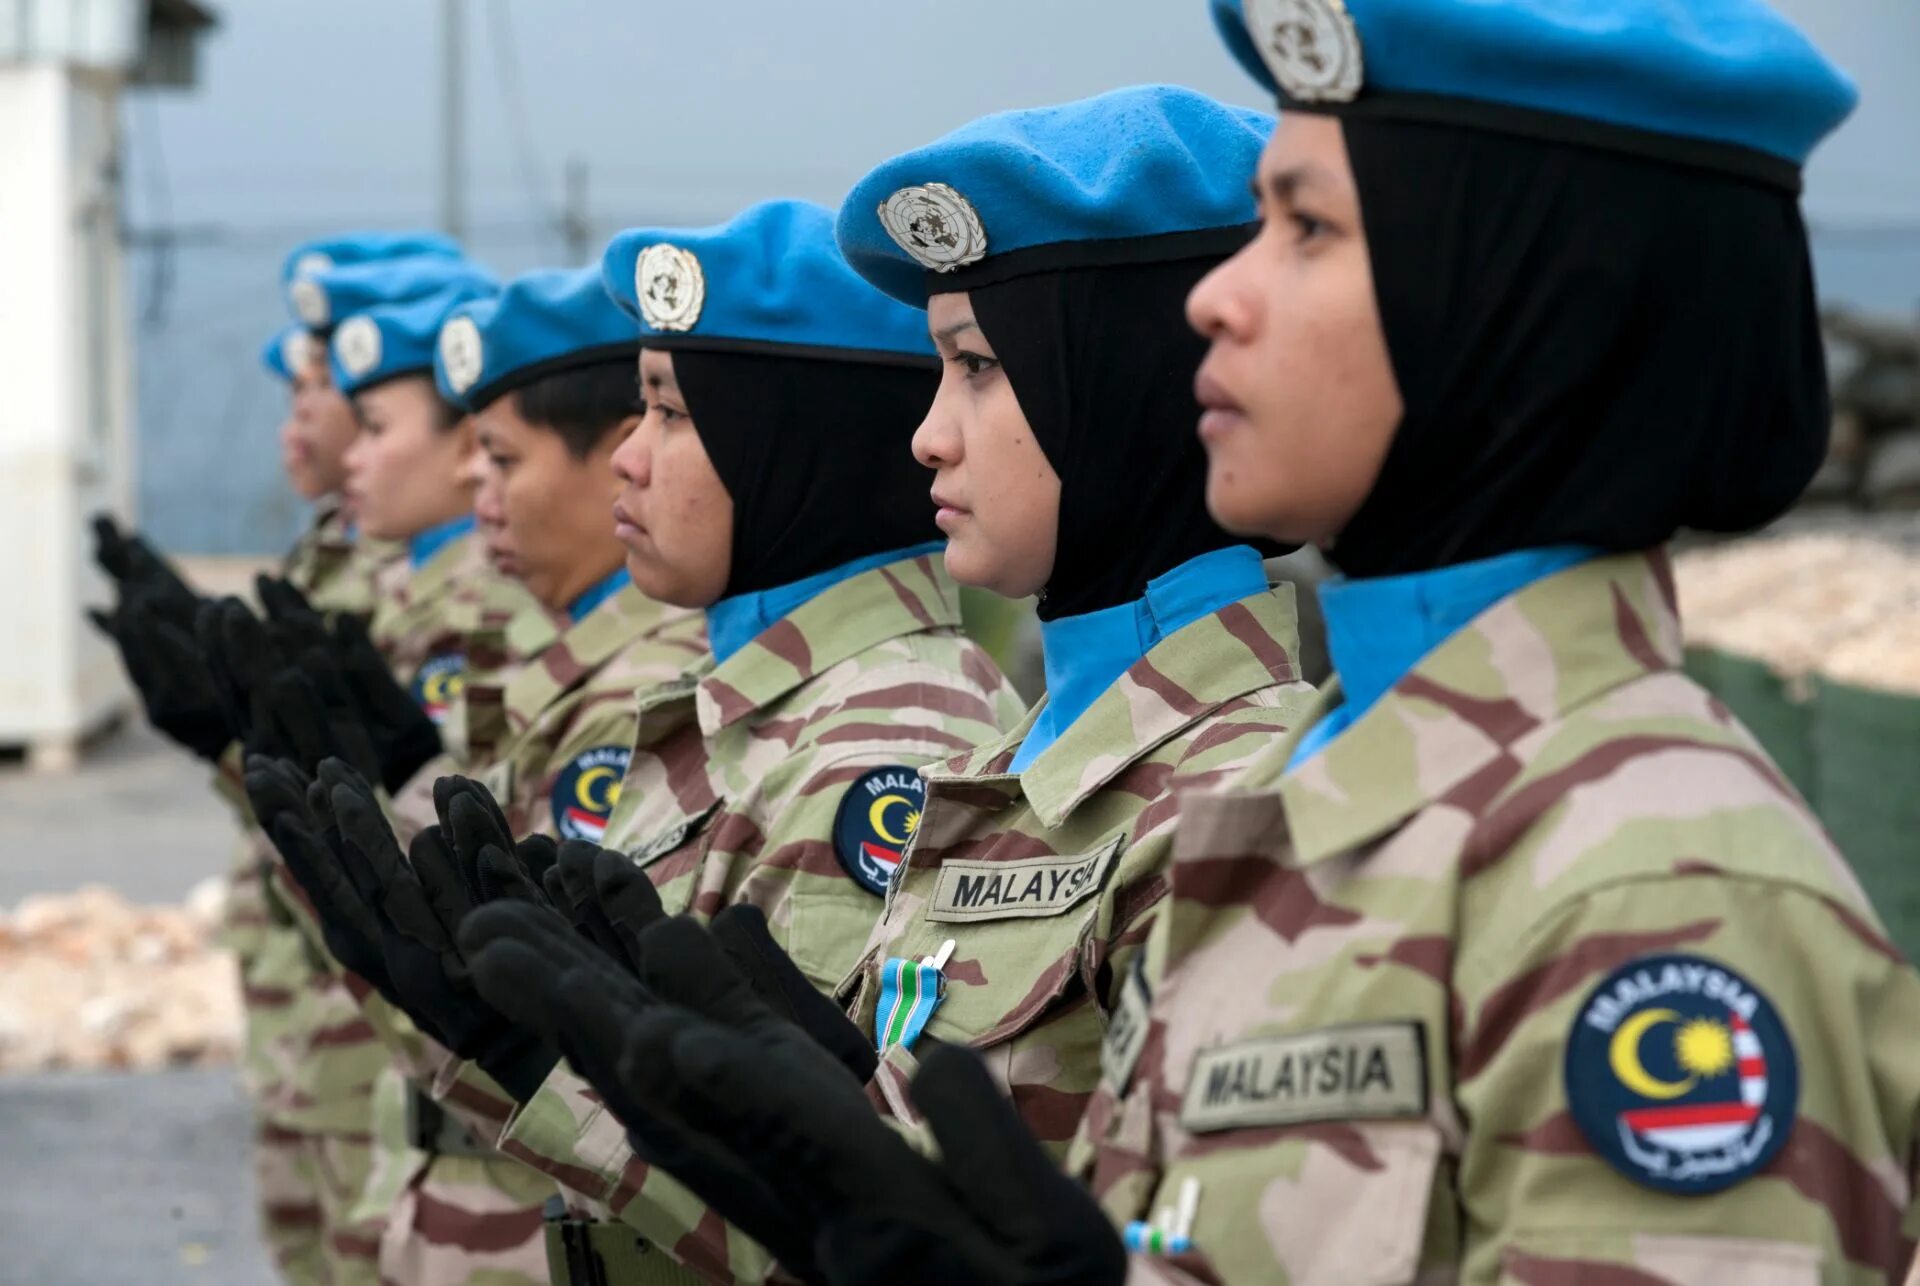 Первая миротворческая операция. Форма миротворческих сил ООН. Солдаты ООН. Миротворцы ООН. Армия ООН.